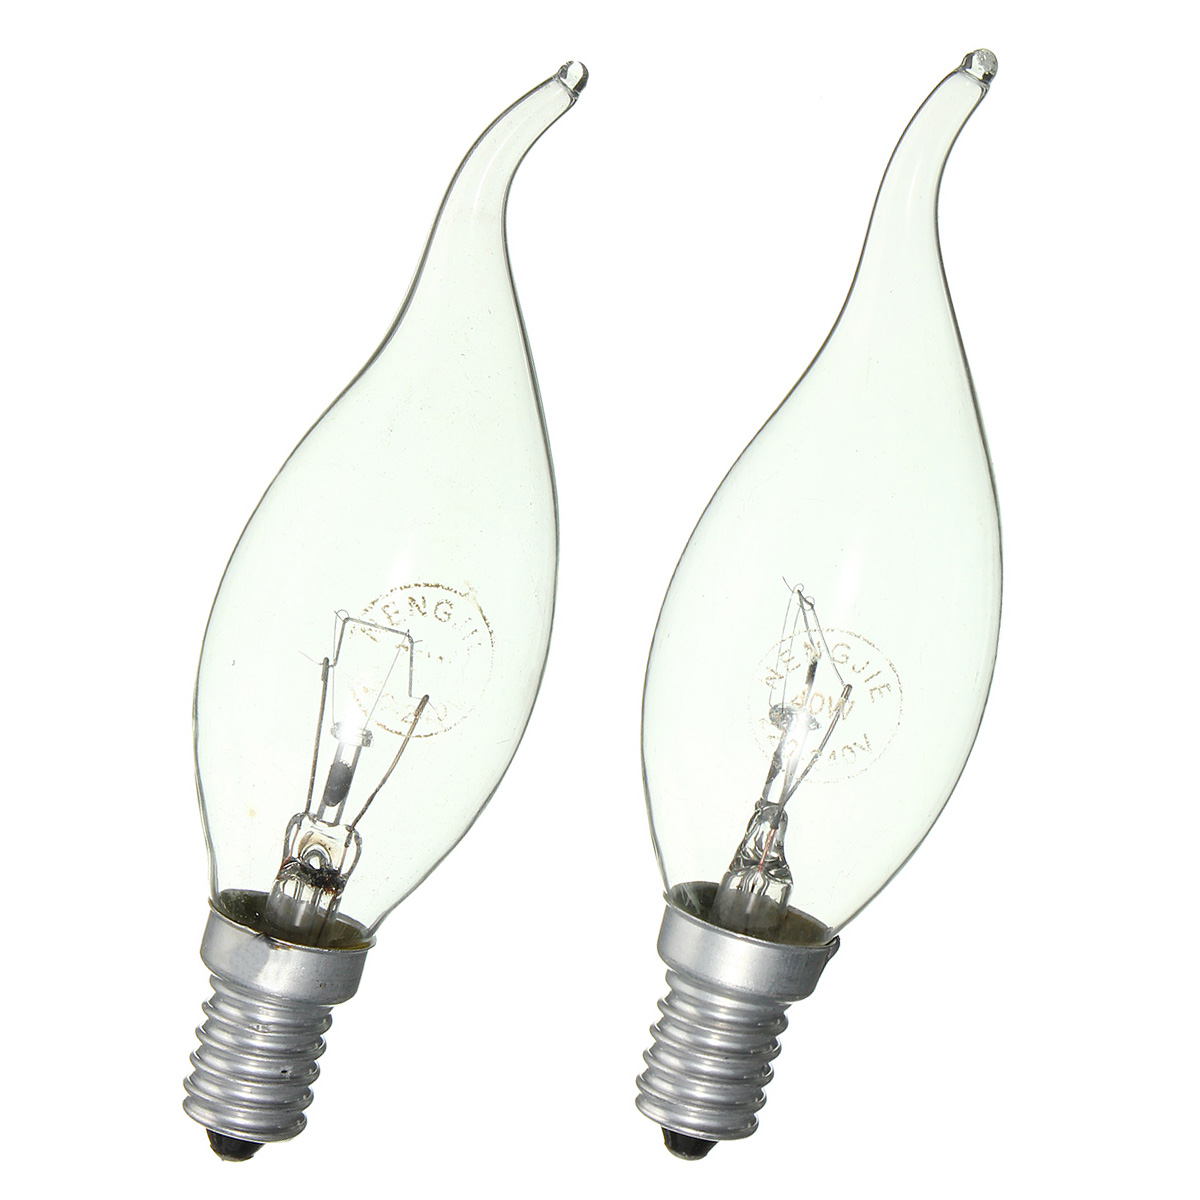 

E14 AC220V Edison Vintage Retro Bulbs Filiment Lamp Warm White Candle Light Bulbs